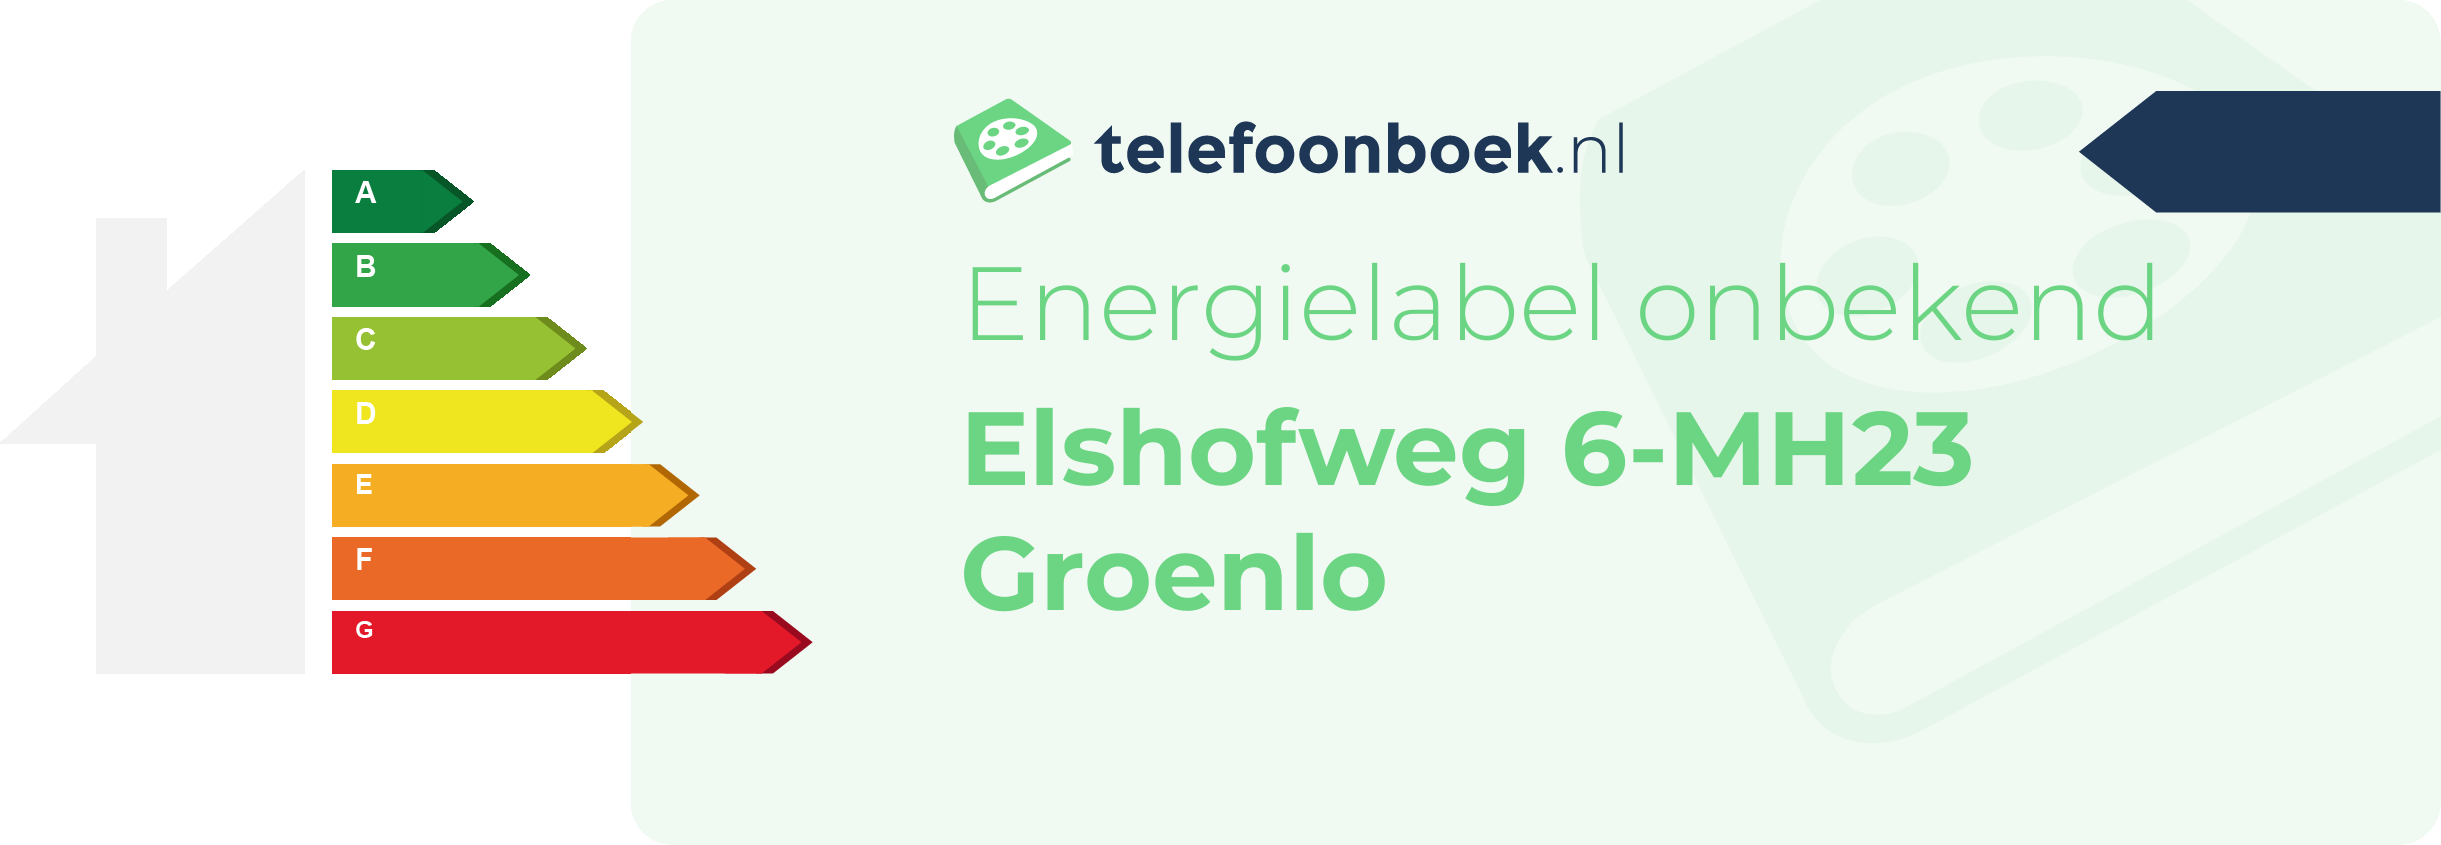 Energielabel Elshofweg 6-MH23 Groenlo